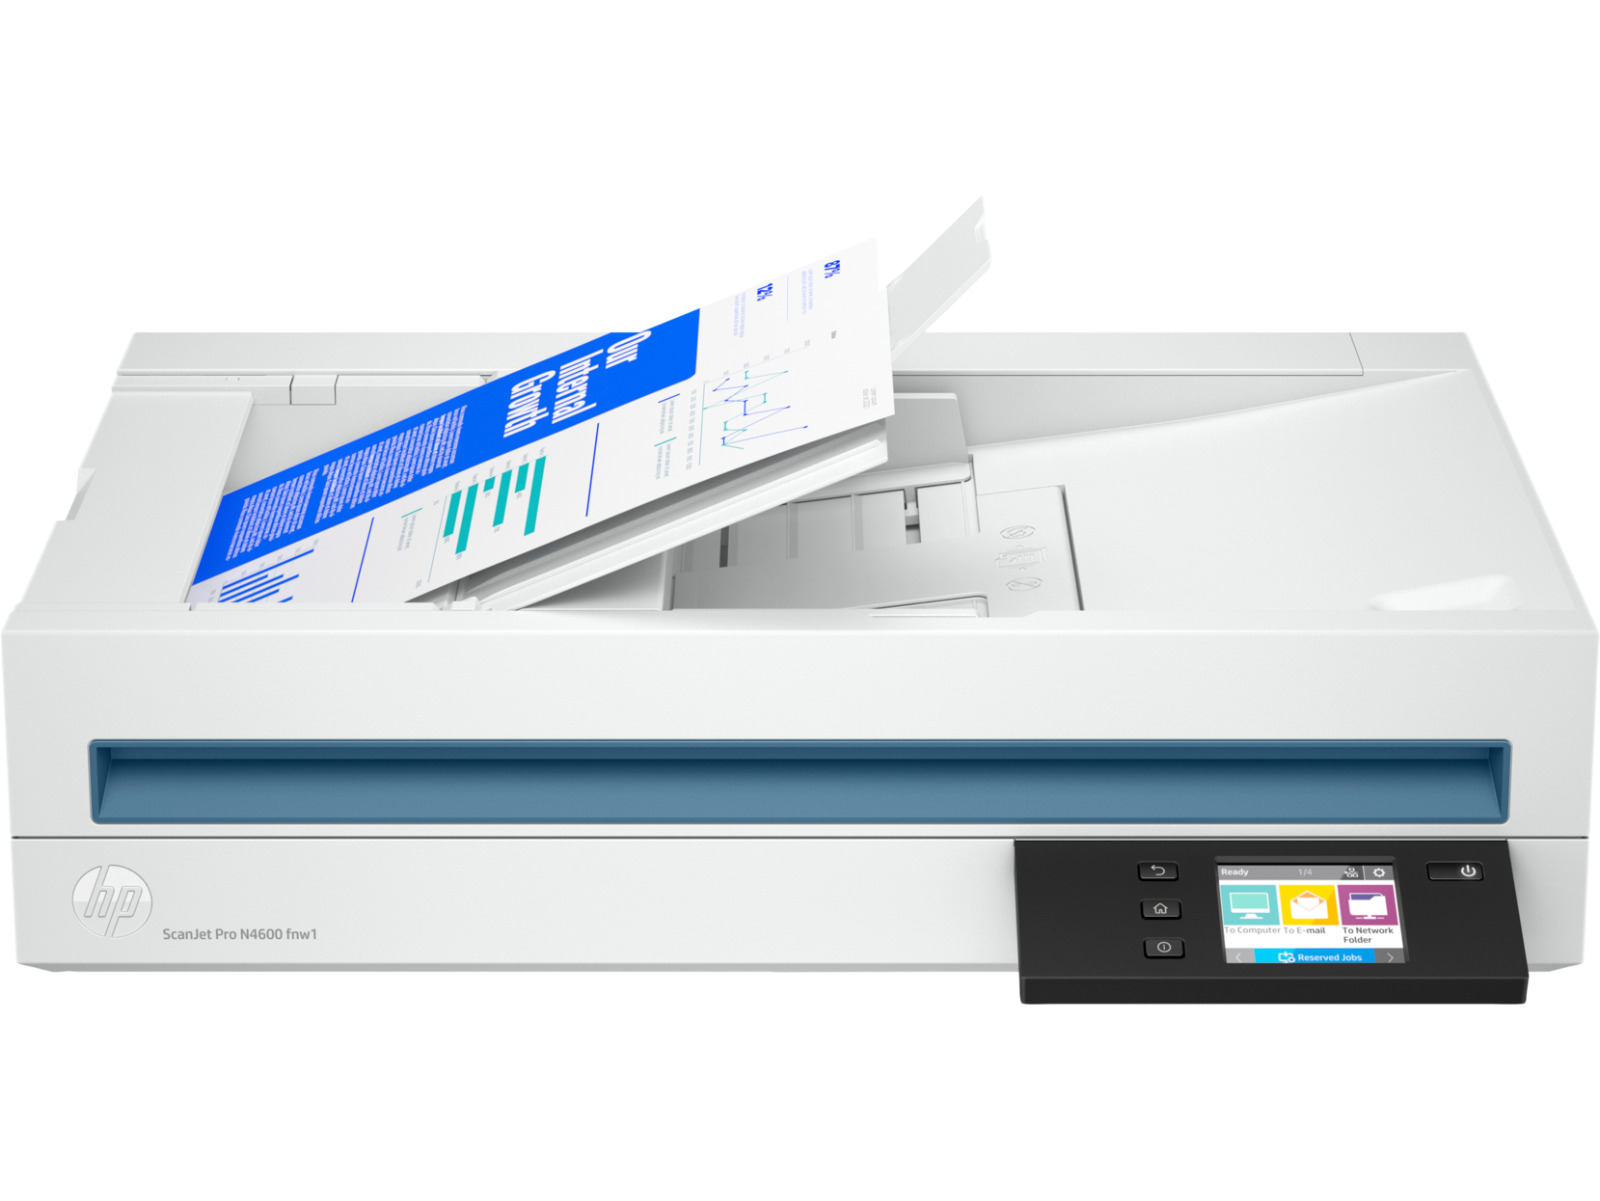 HP ScanJet Pro N4600 fnw1 Desktop Network Touchscreen Document Scanner 20G07A